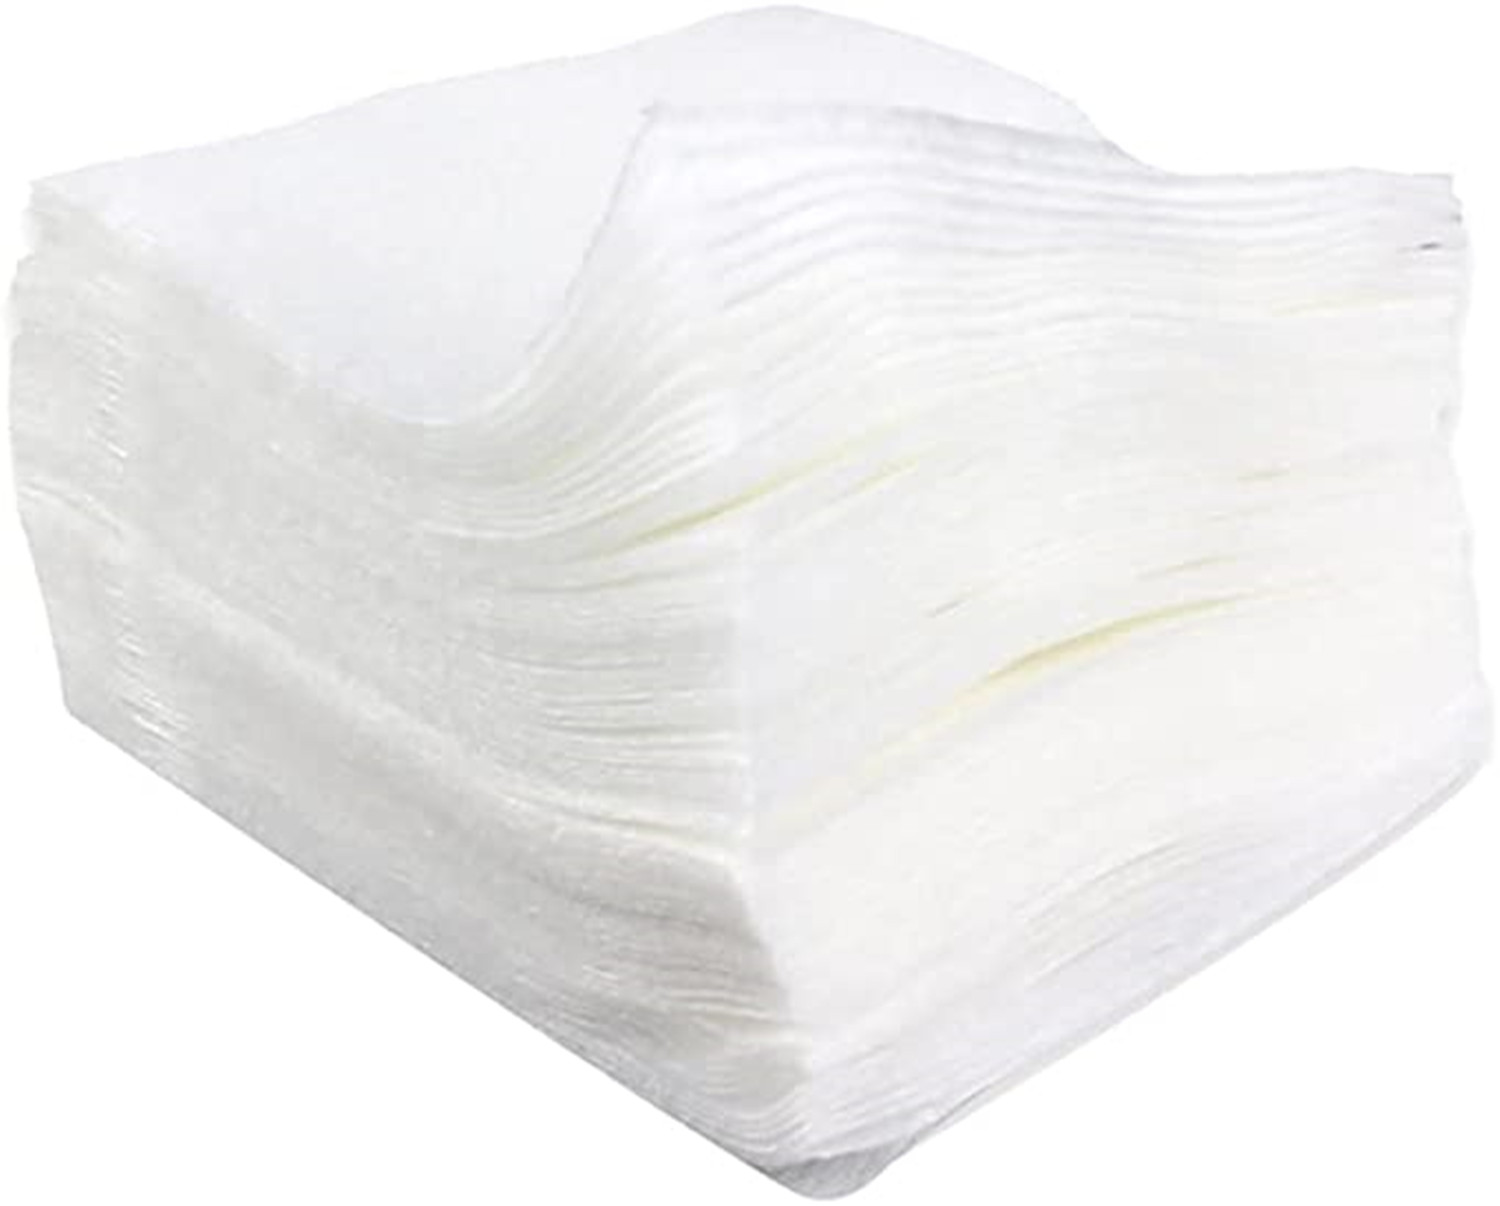 Disposable Bedding Sheets